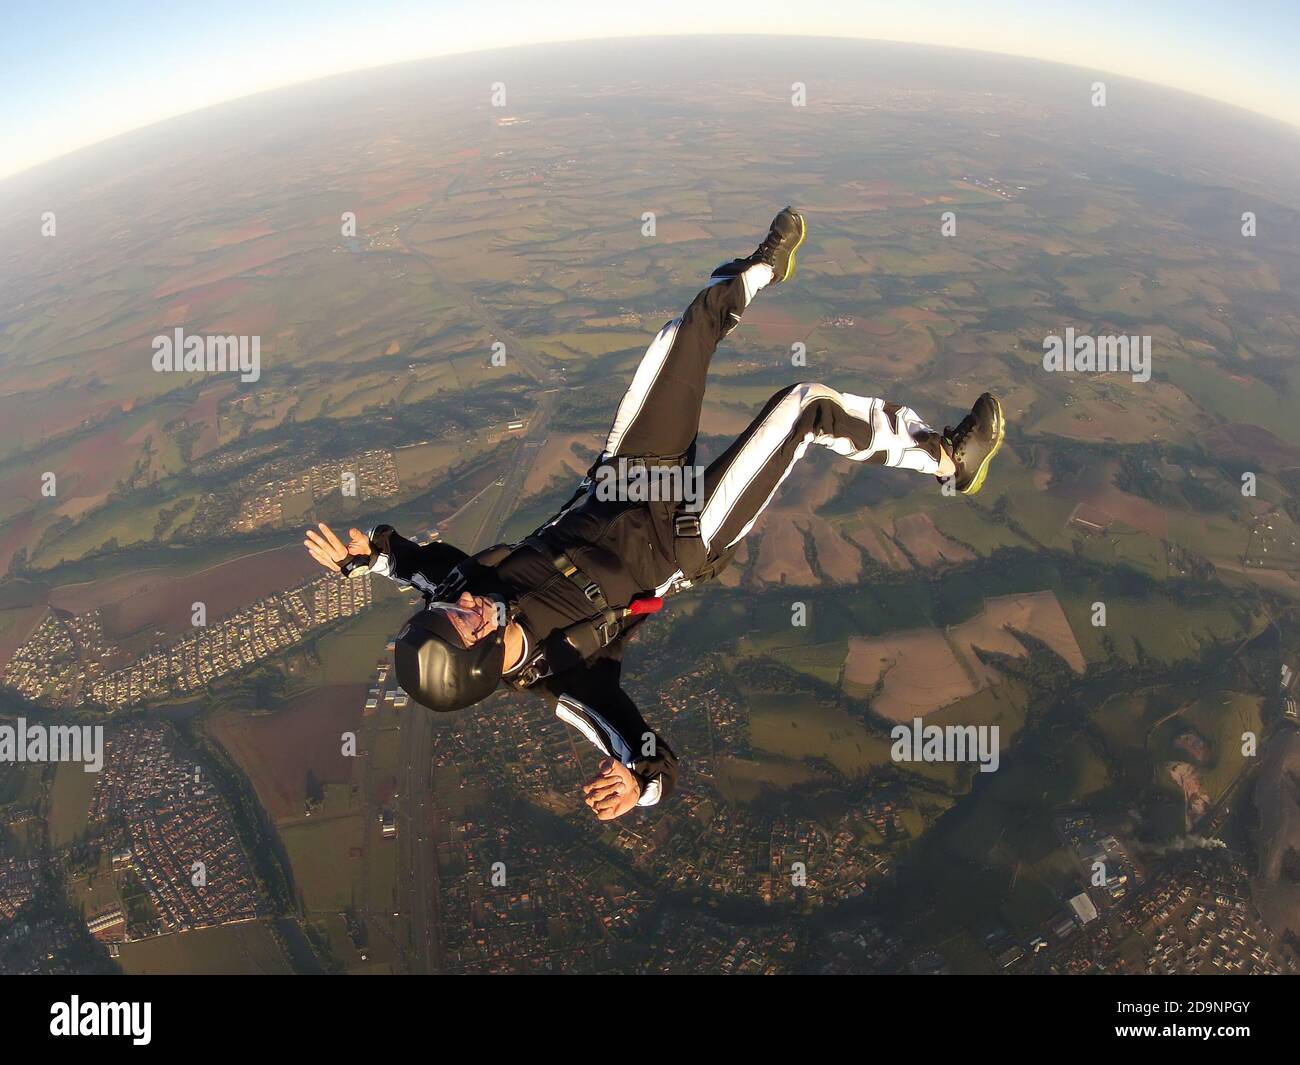 Skydiver having fun at the skies Stock Photo